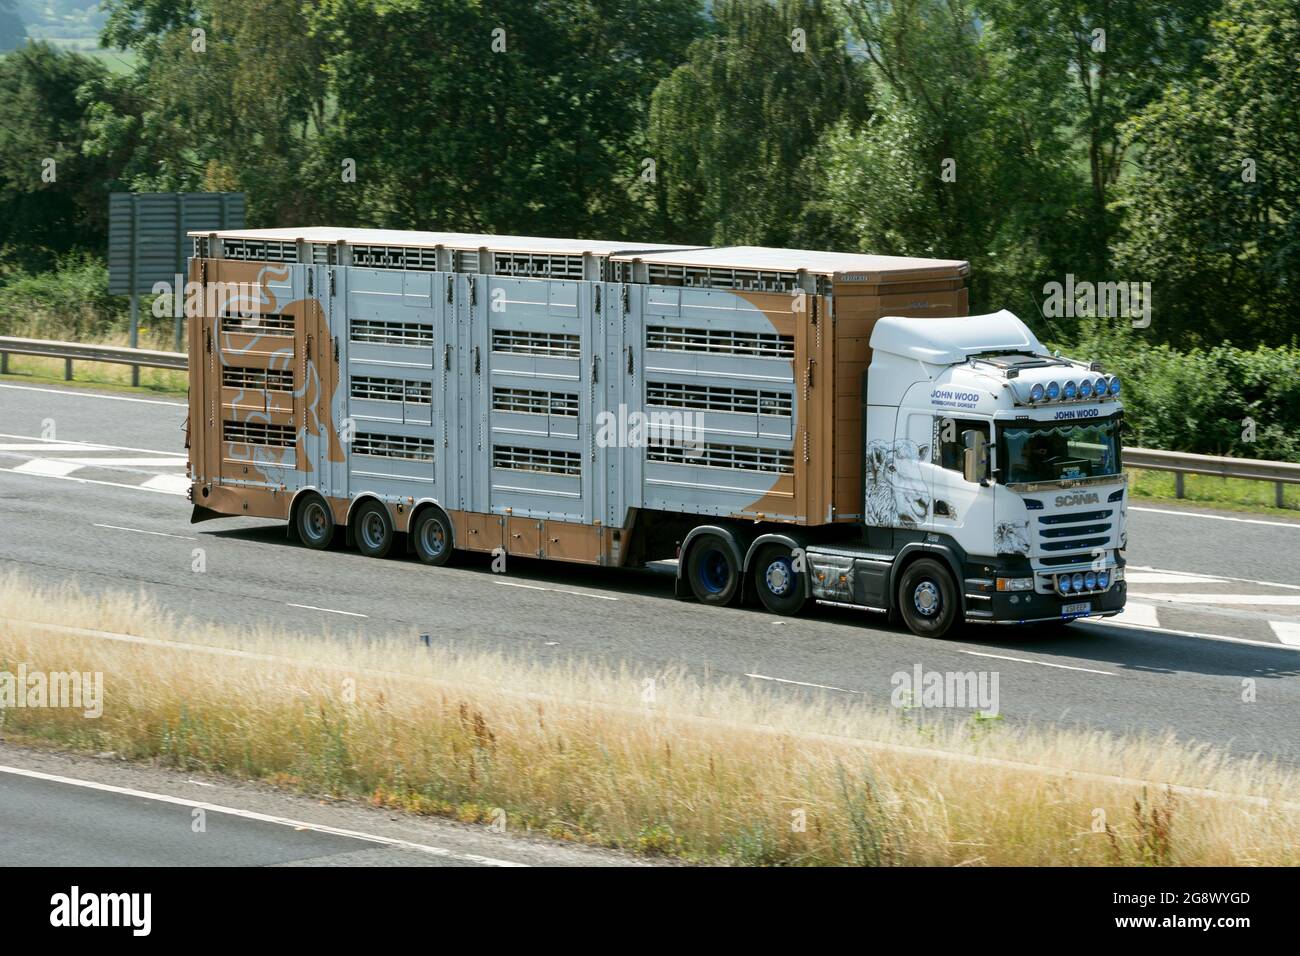 A lorry transporting sheep on the M40 motorway, Warwickshire, UK Stock Photo